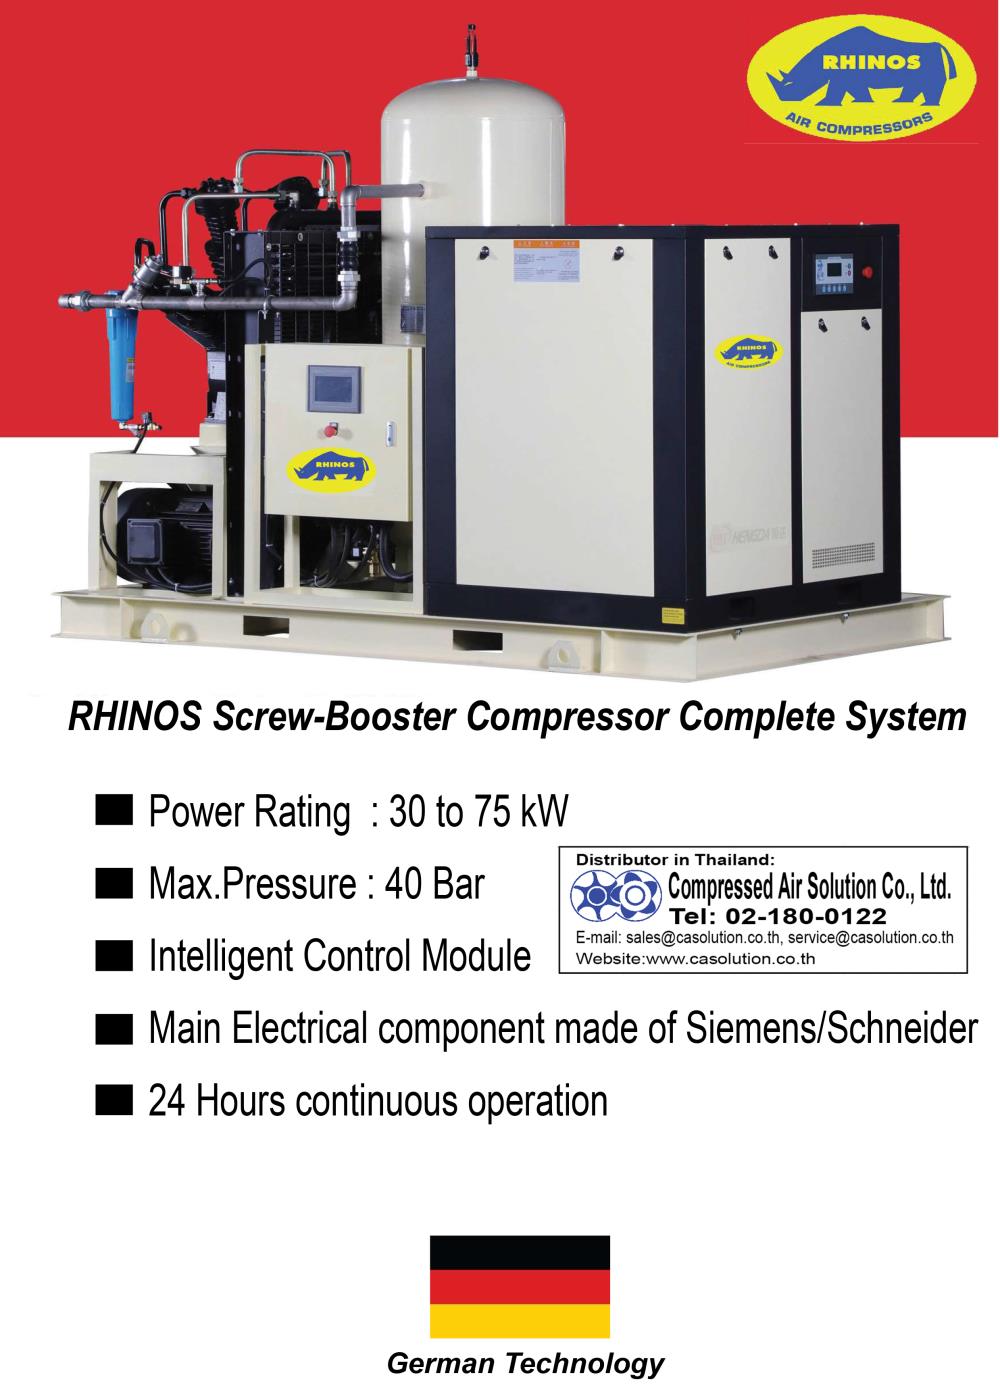 RHINOS Screw Air Compressor+Booster ประสิทธิภาพสูง,booster compressor,RHINOS,Machinery and Process Equipment/Compressors/Air Compressor